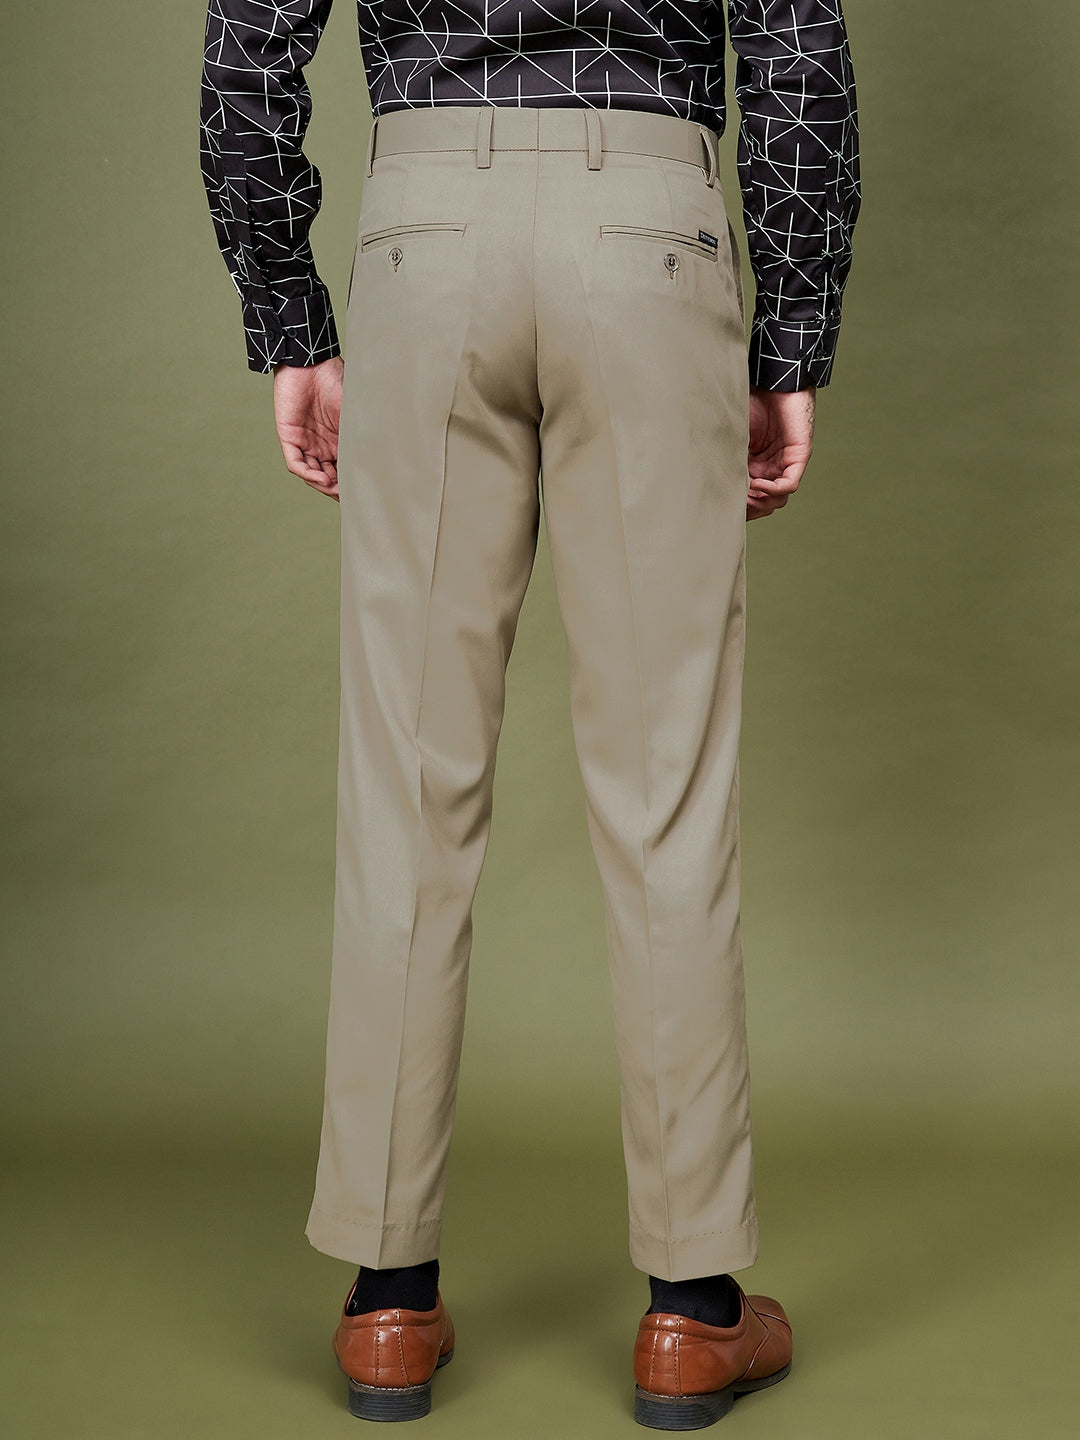 Flat Front Mid Rise Slacks [AK013-7115-NAVY] - FlynnO'Hara Uniforms